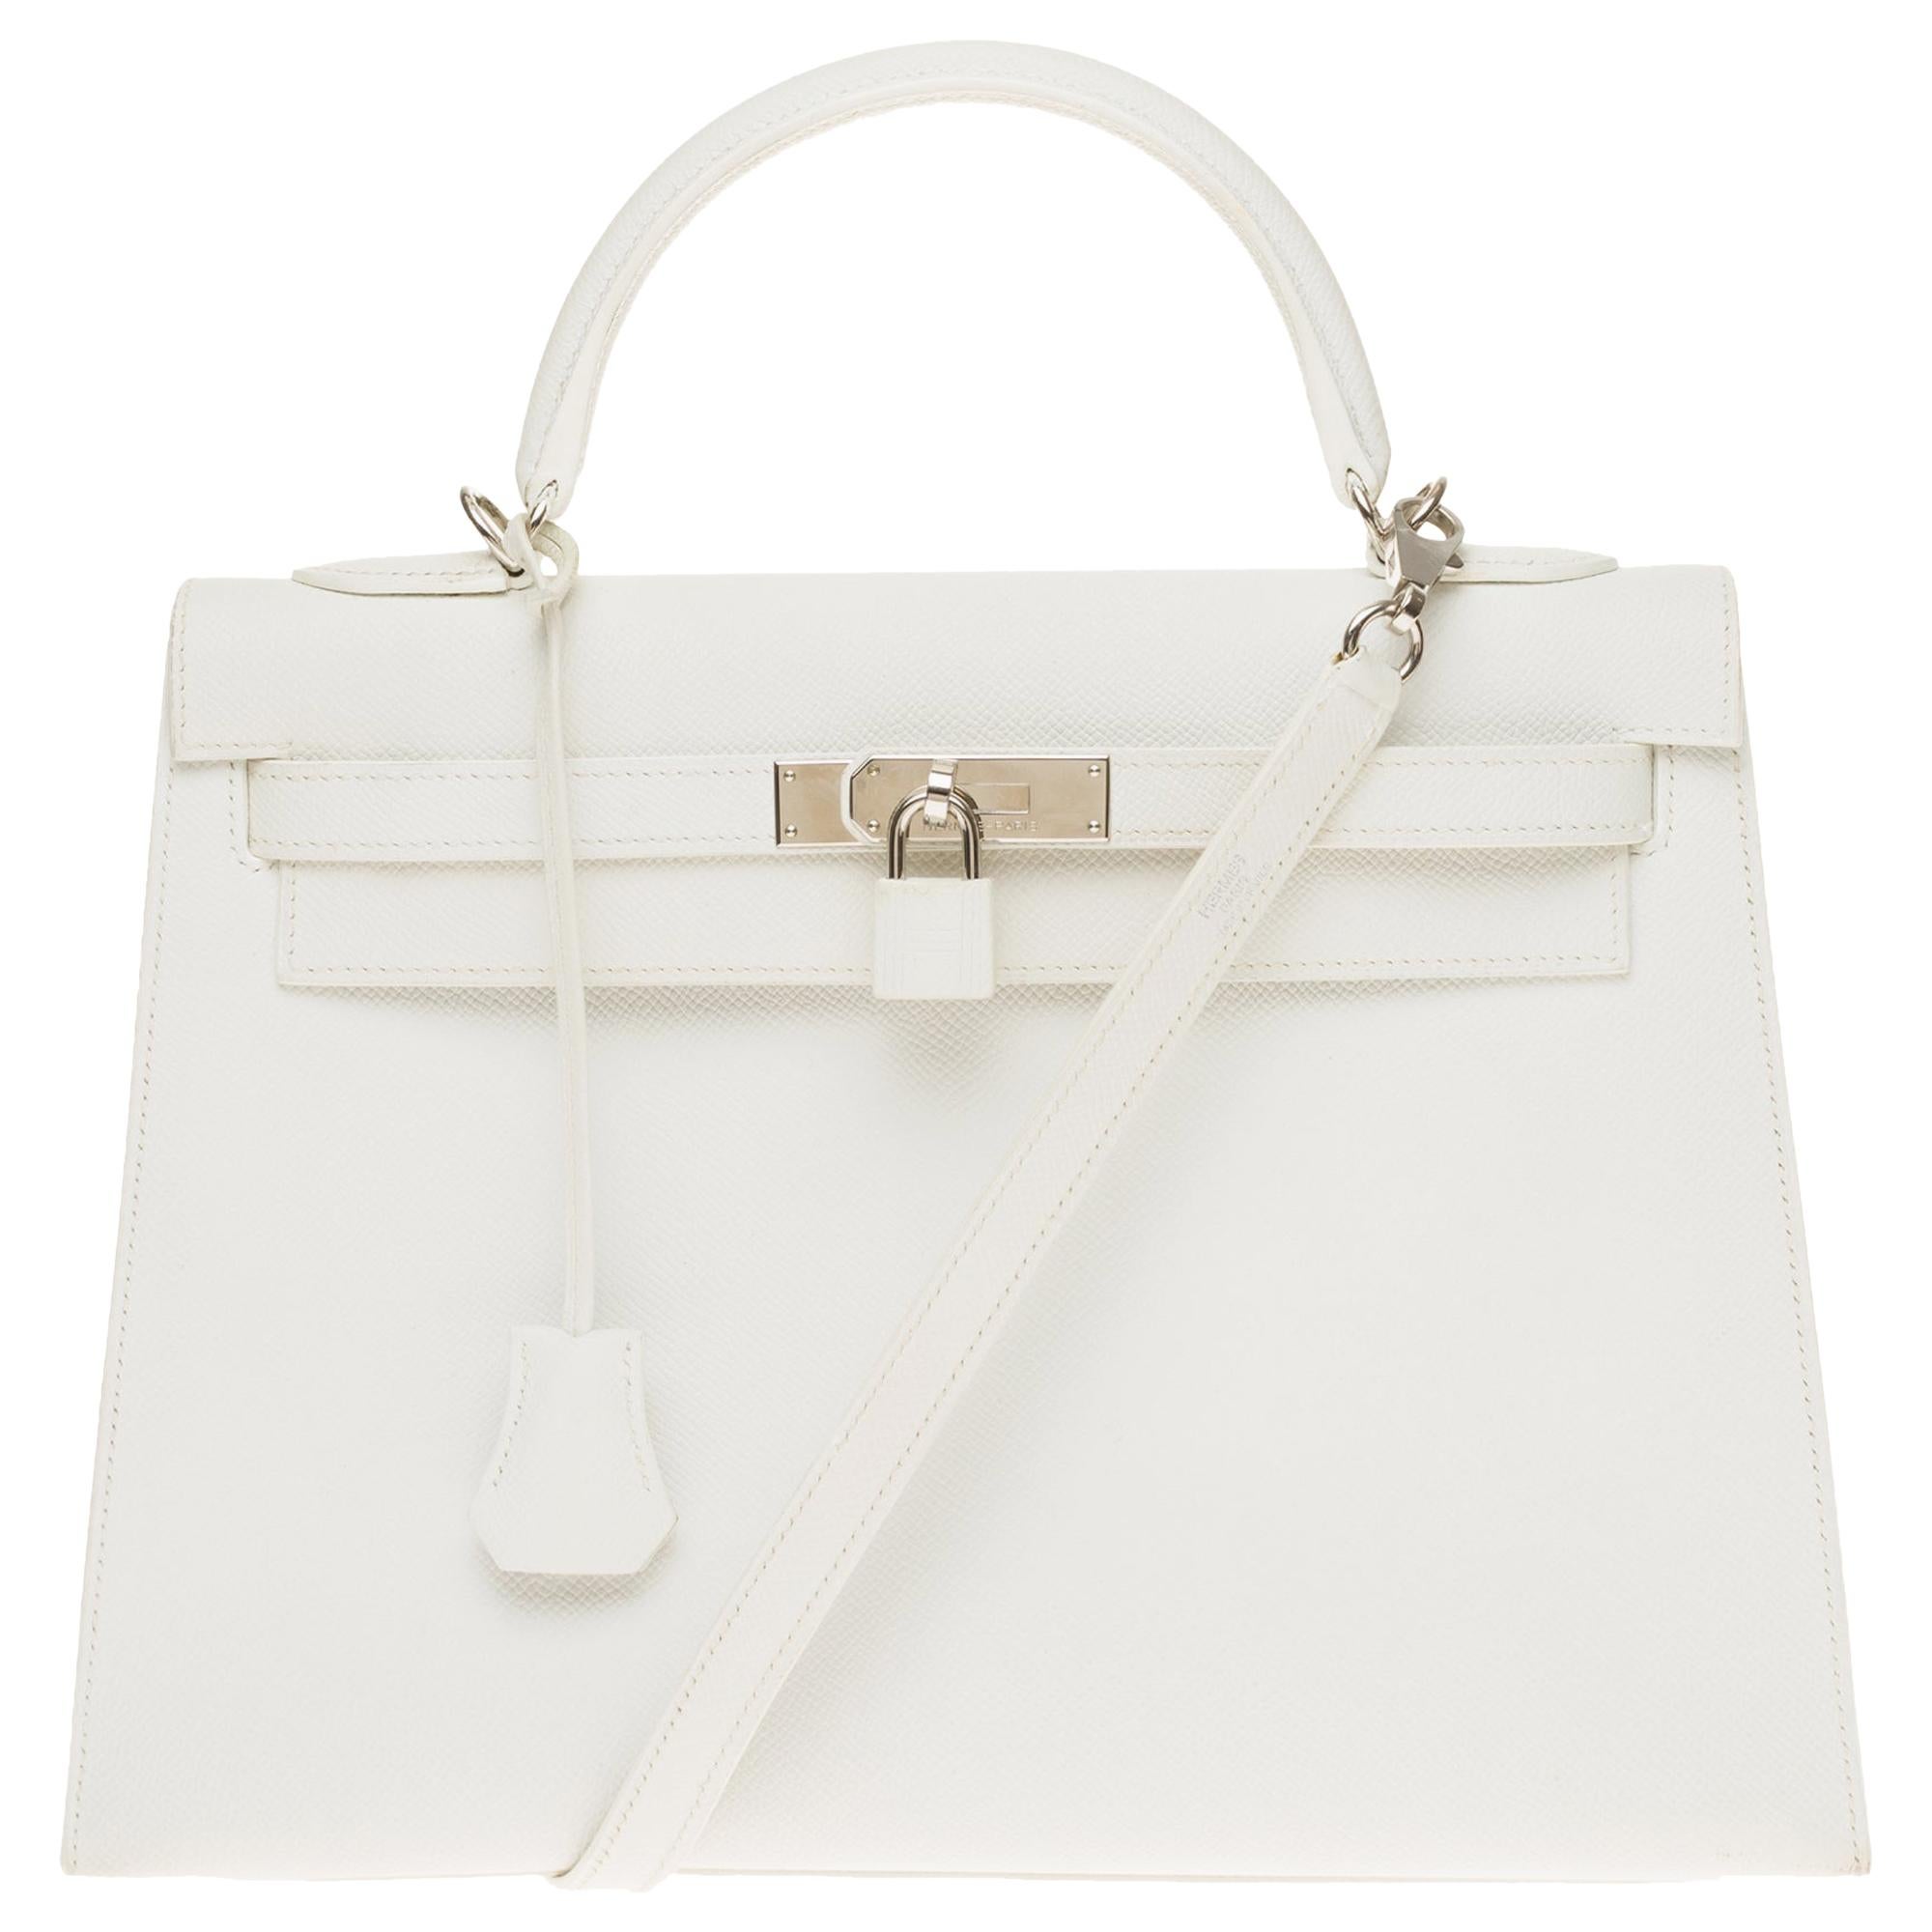 Hermès Kelly 32cm handbag with strap in white epsom leather, Palladium hardware